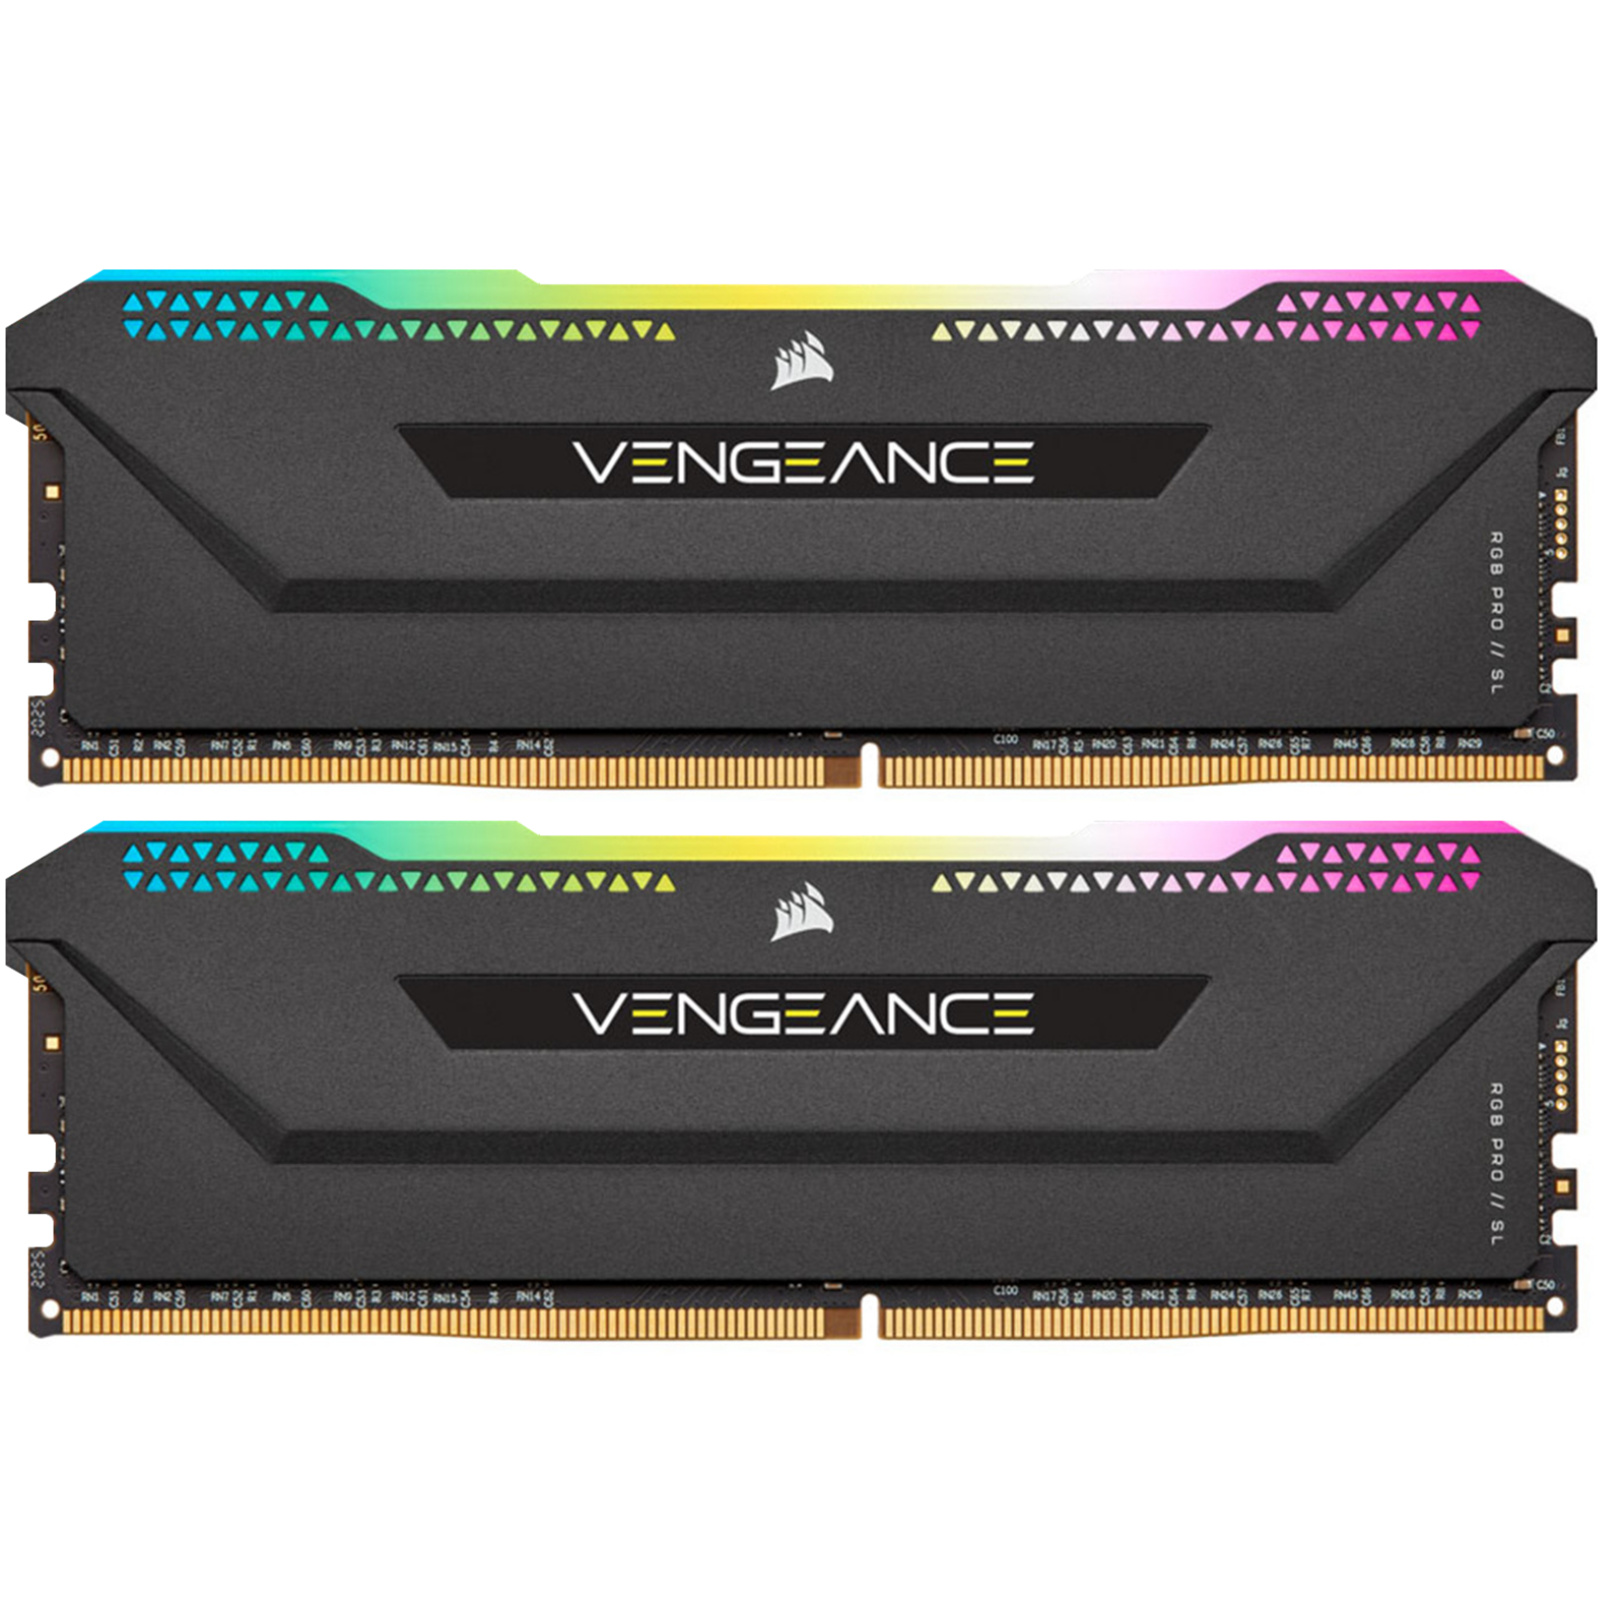 Corsair Vengeance RGB PRO SL 32GB (2x16GB) DDR4 3600Mhz C18 Black Heatspreader Desktop Gaming Memory